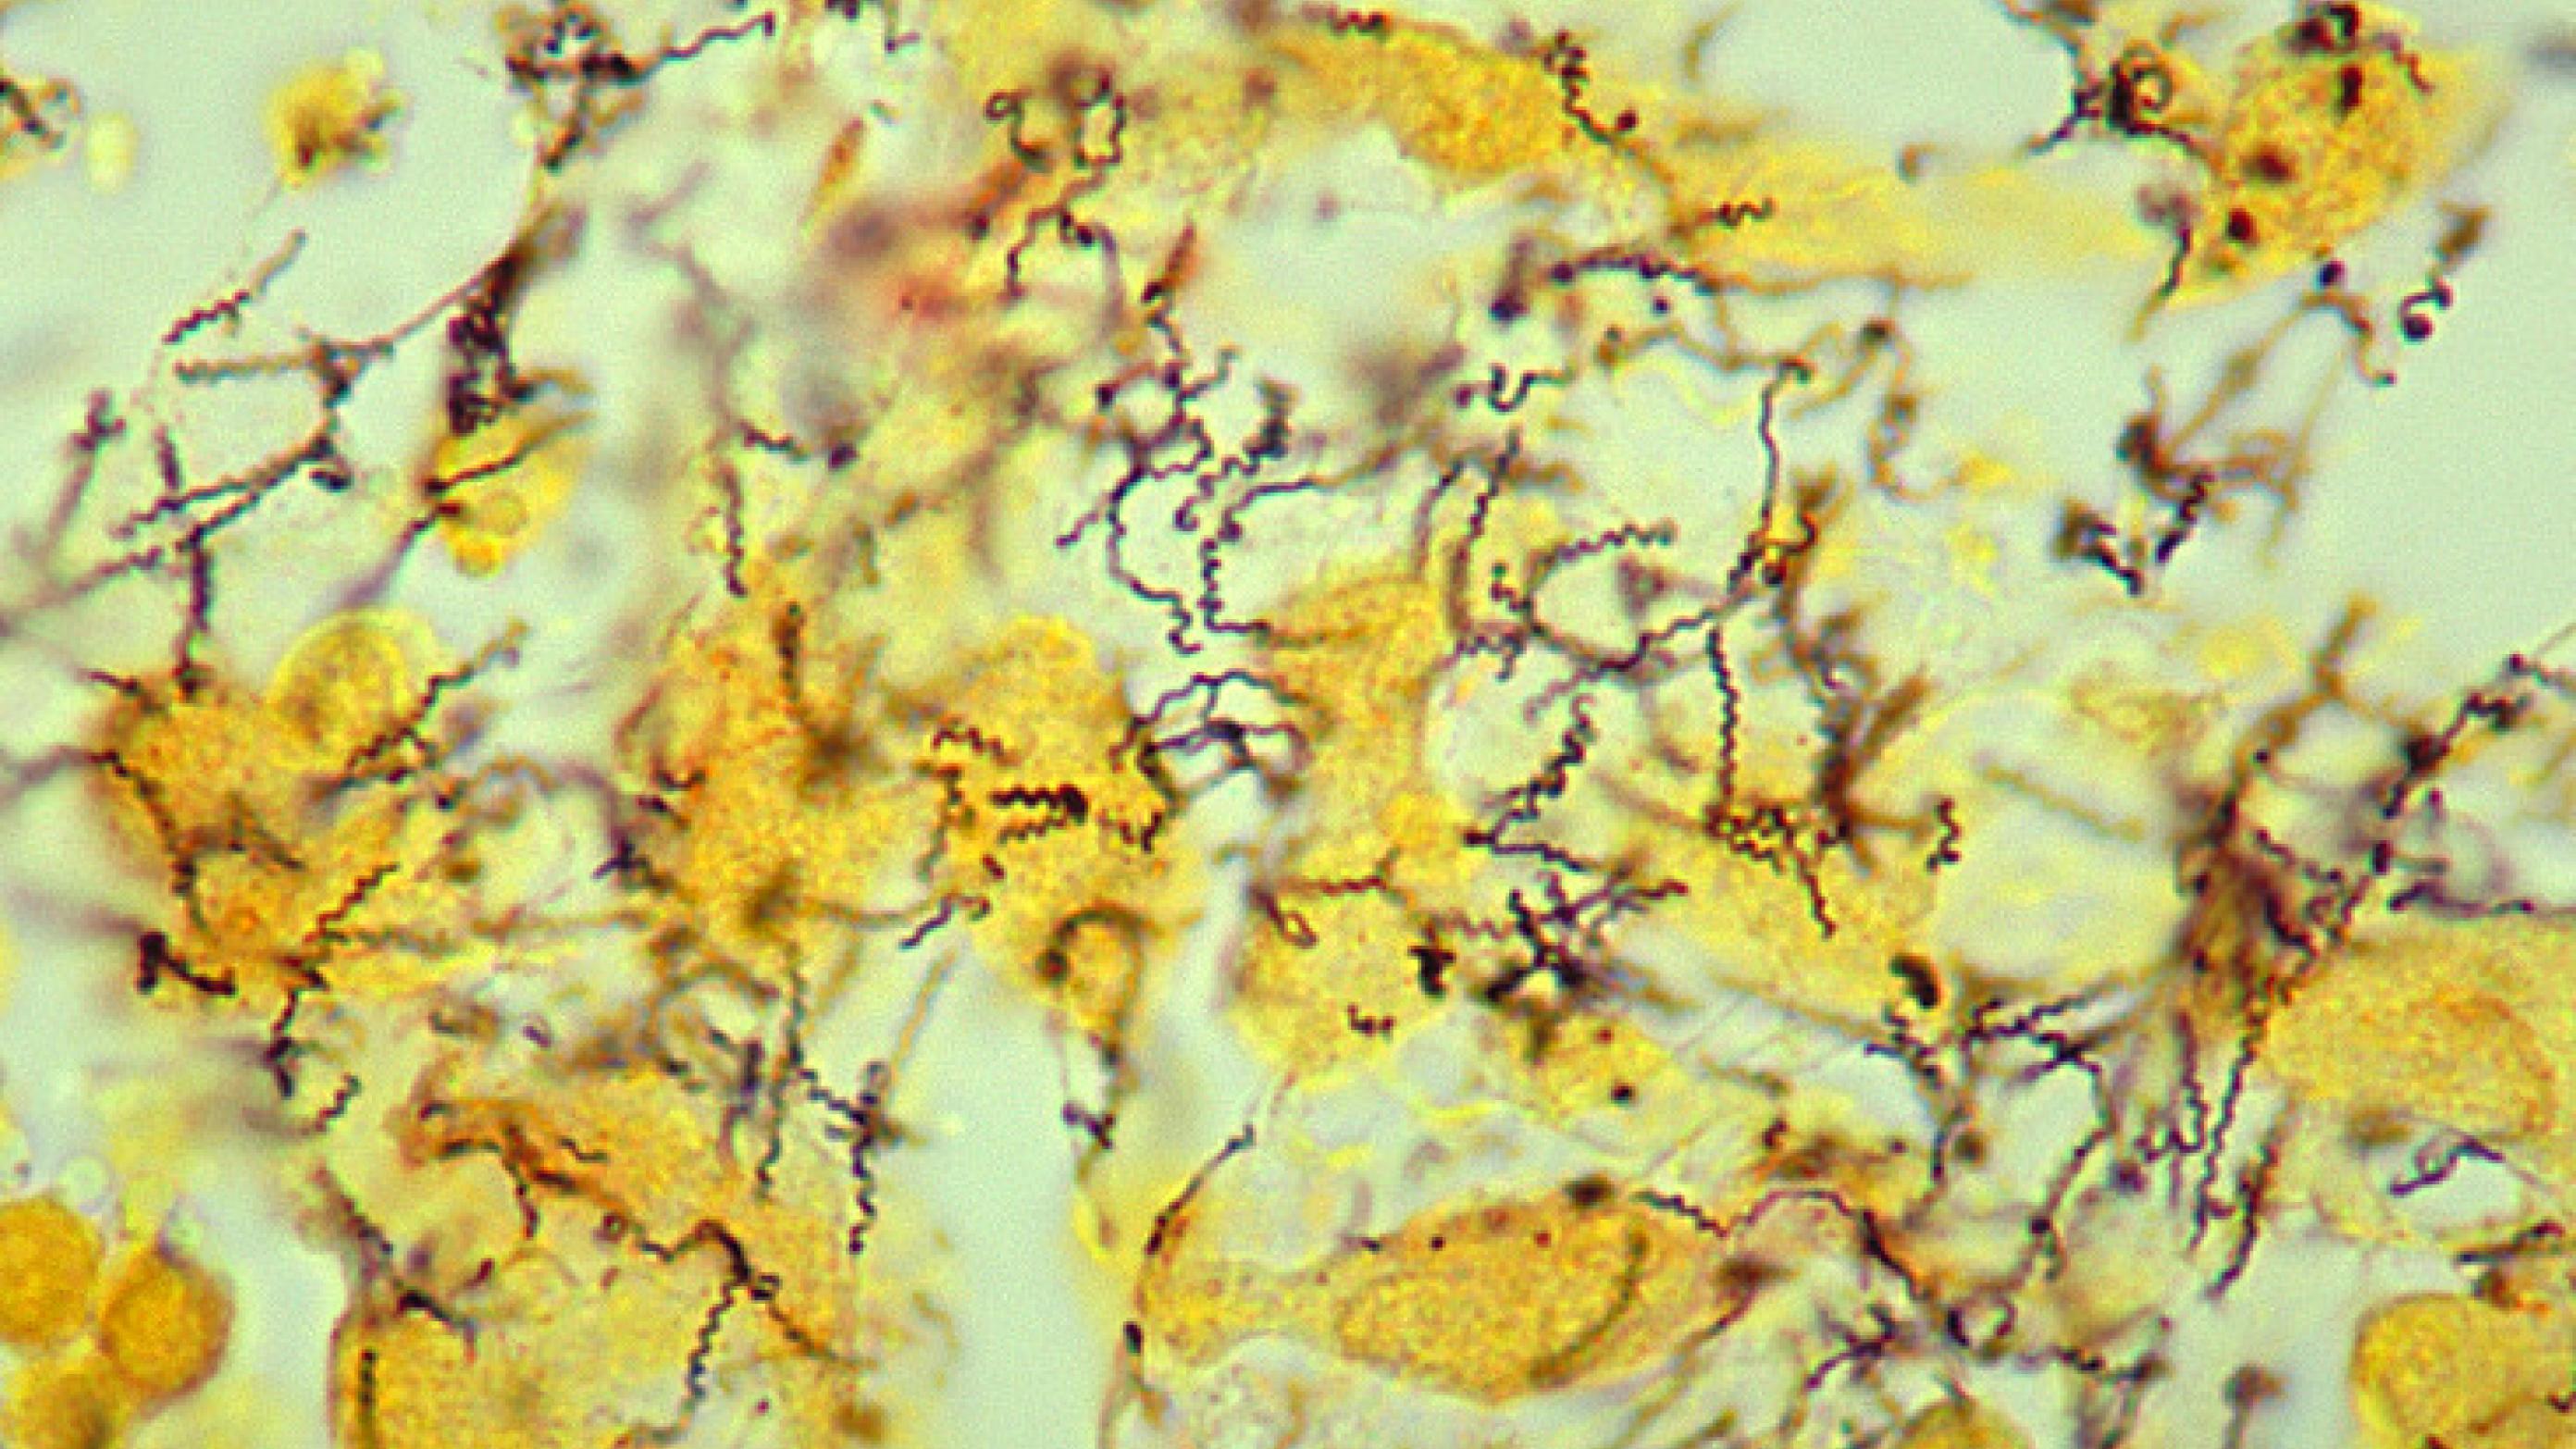 Treponema pallidum - syfilisbacillen. Foto: Wikimedia